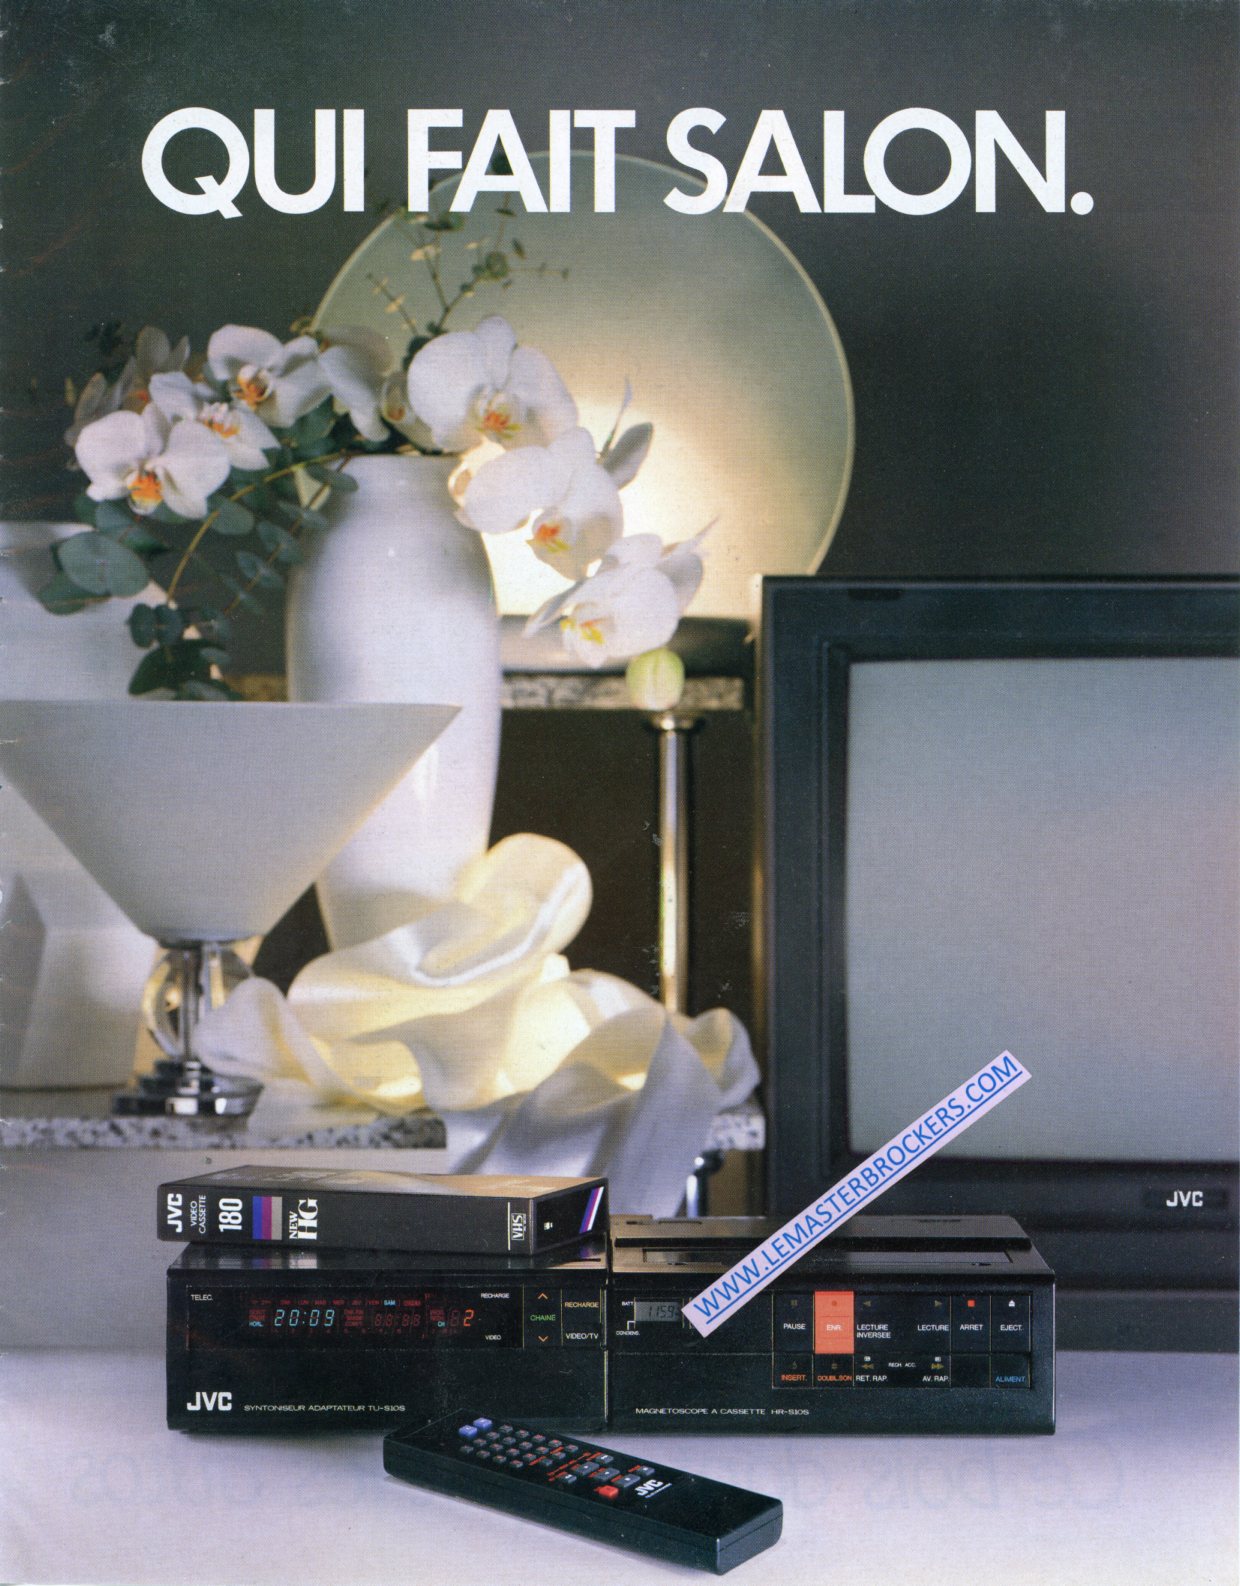 PUBLICITÉ JVC VHS DE POCHE HR-S10 GX-N7 GX-N4 - ADVERTISING 1985